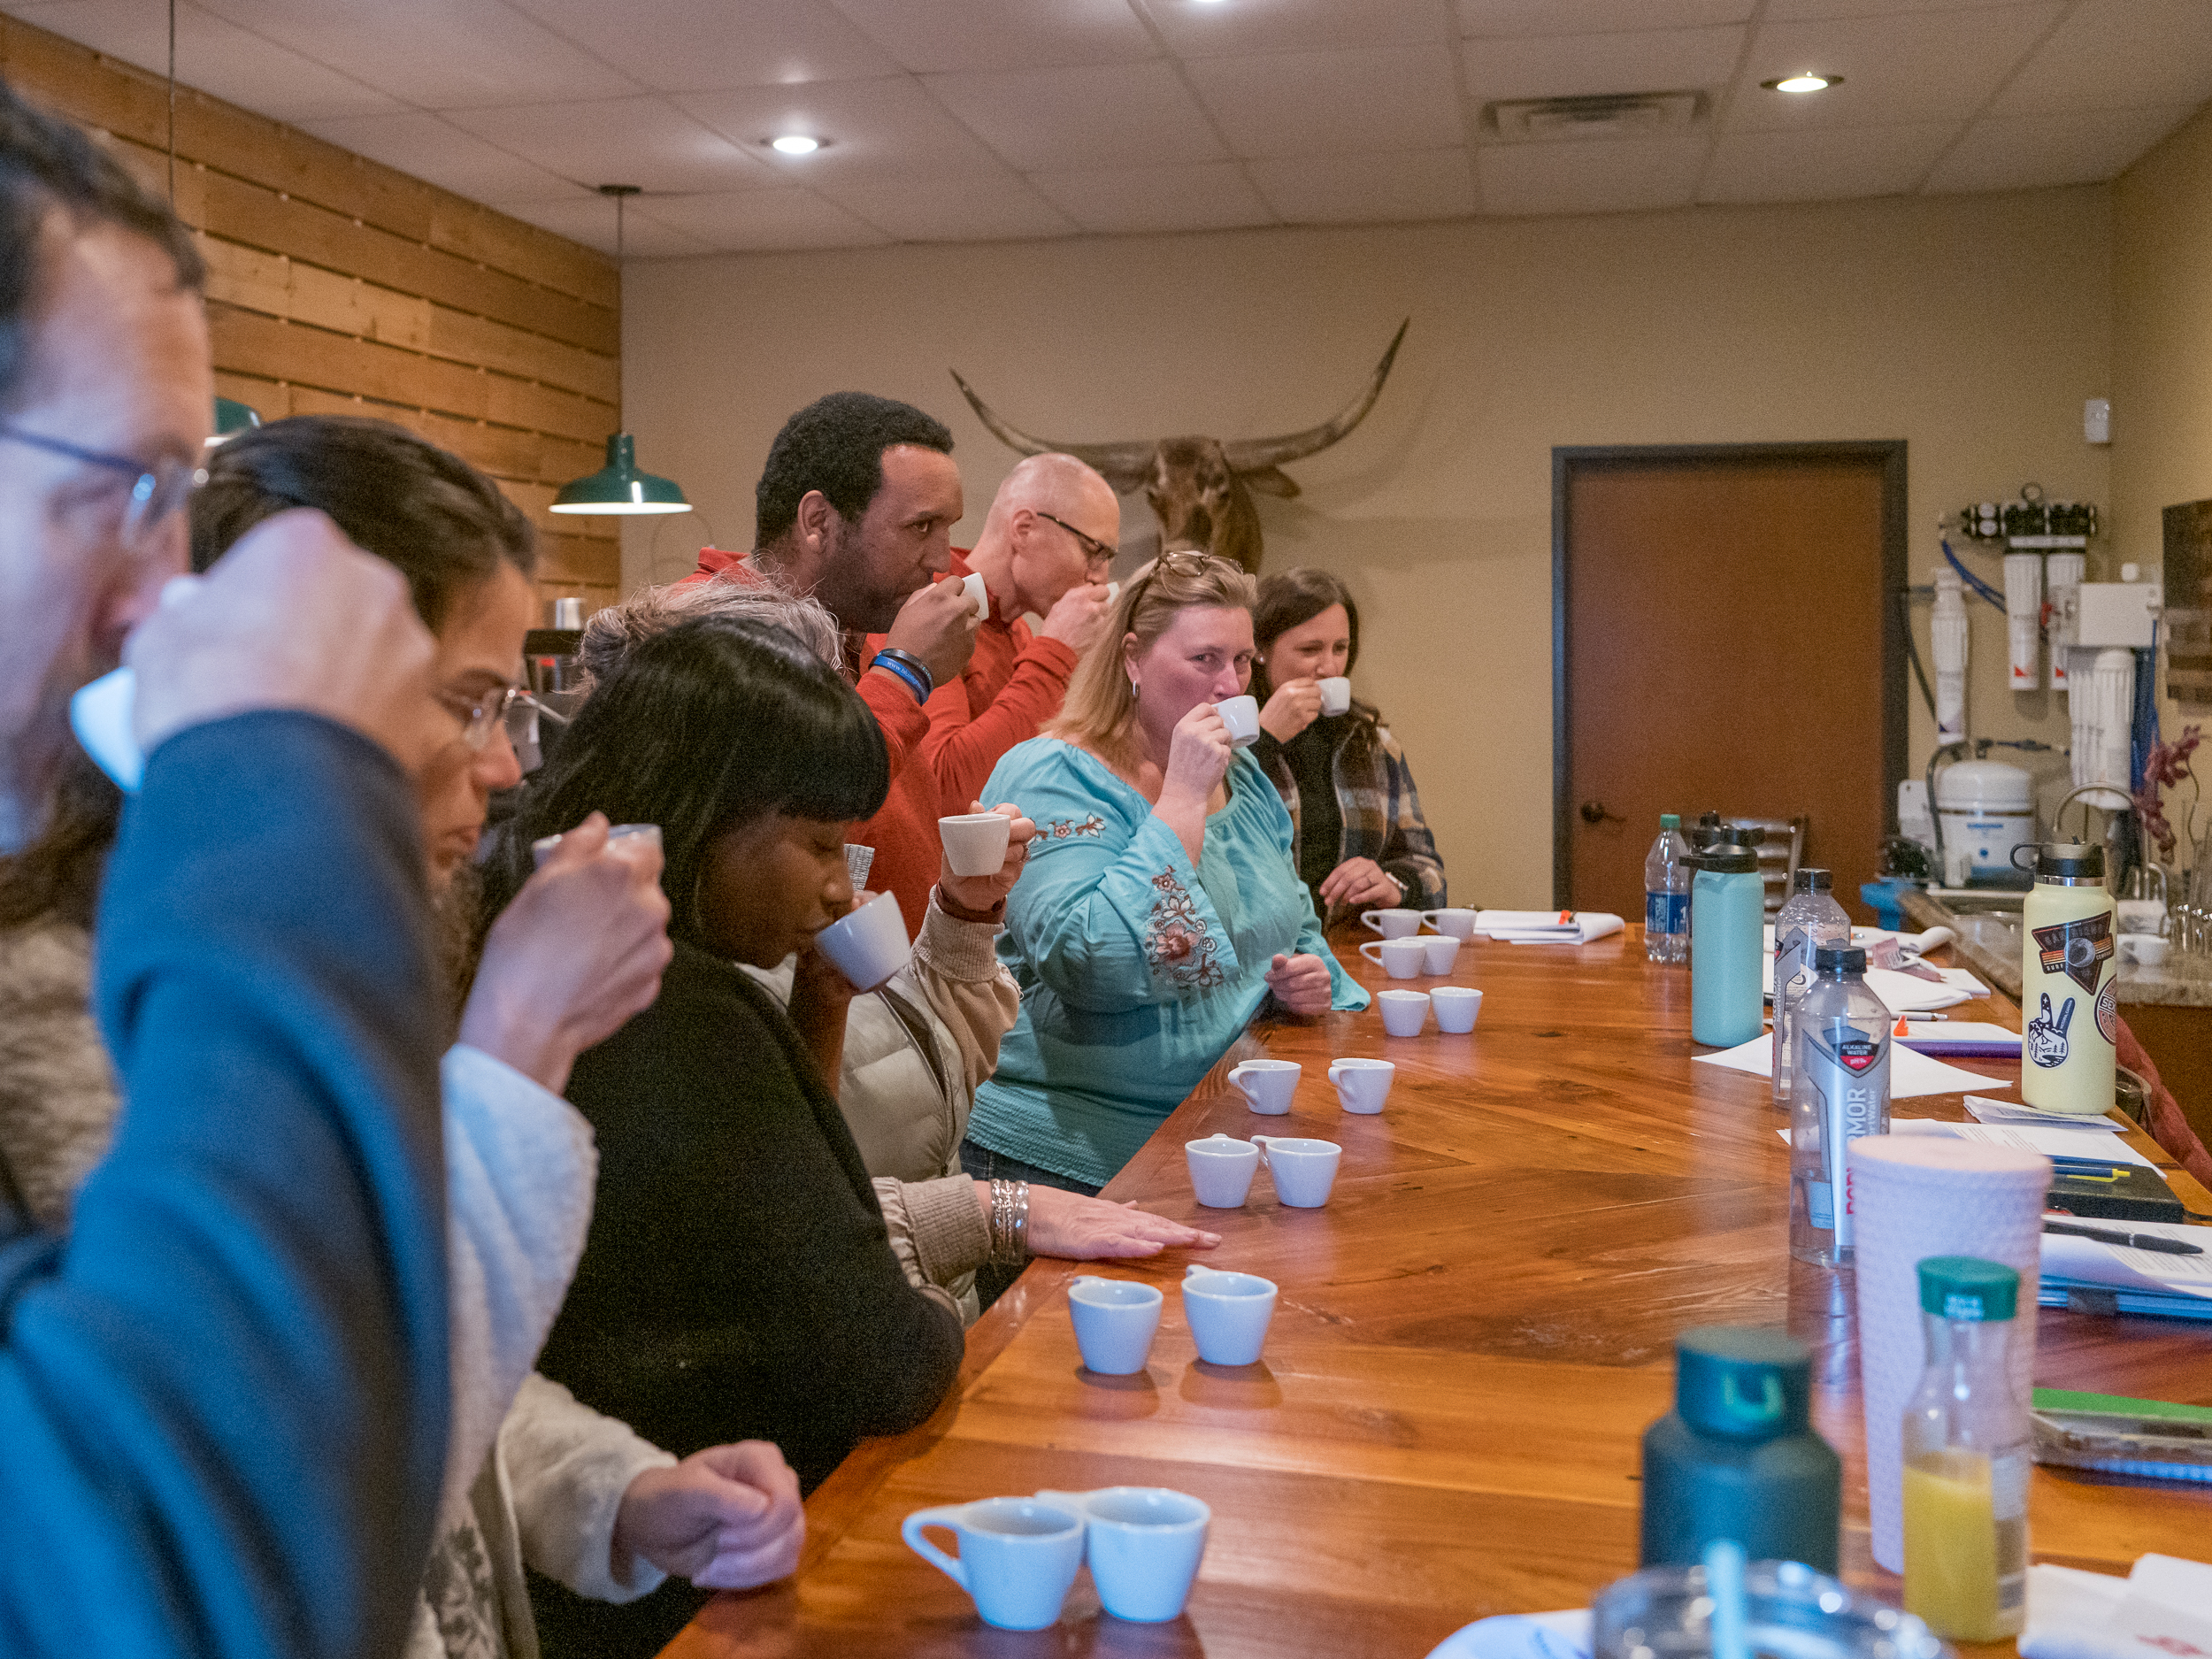 Students sip coffee at Texas Coffee School.